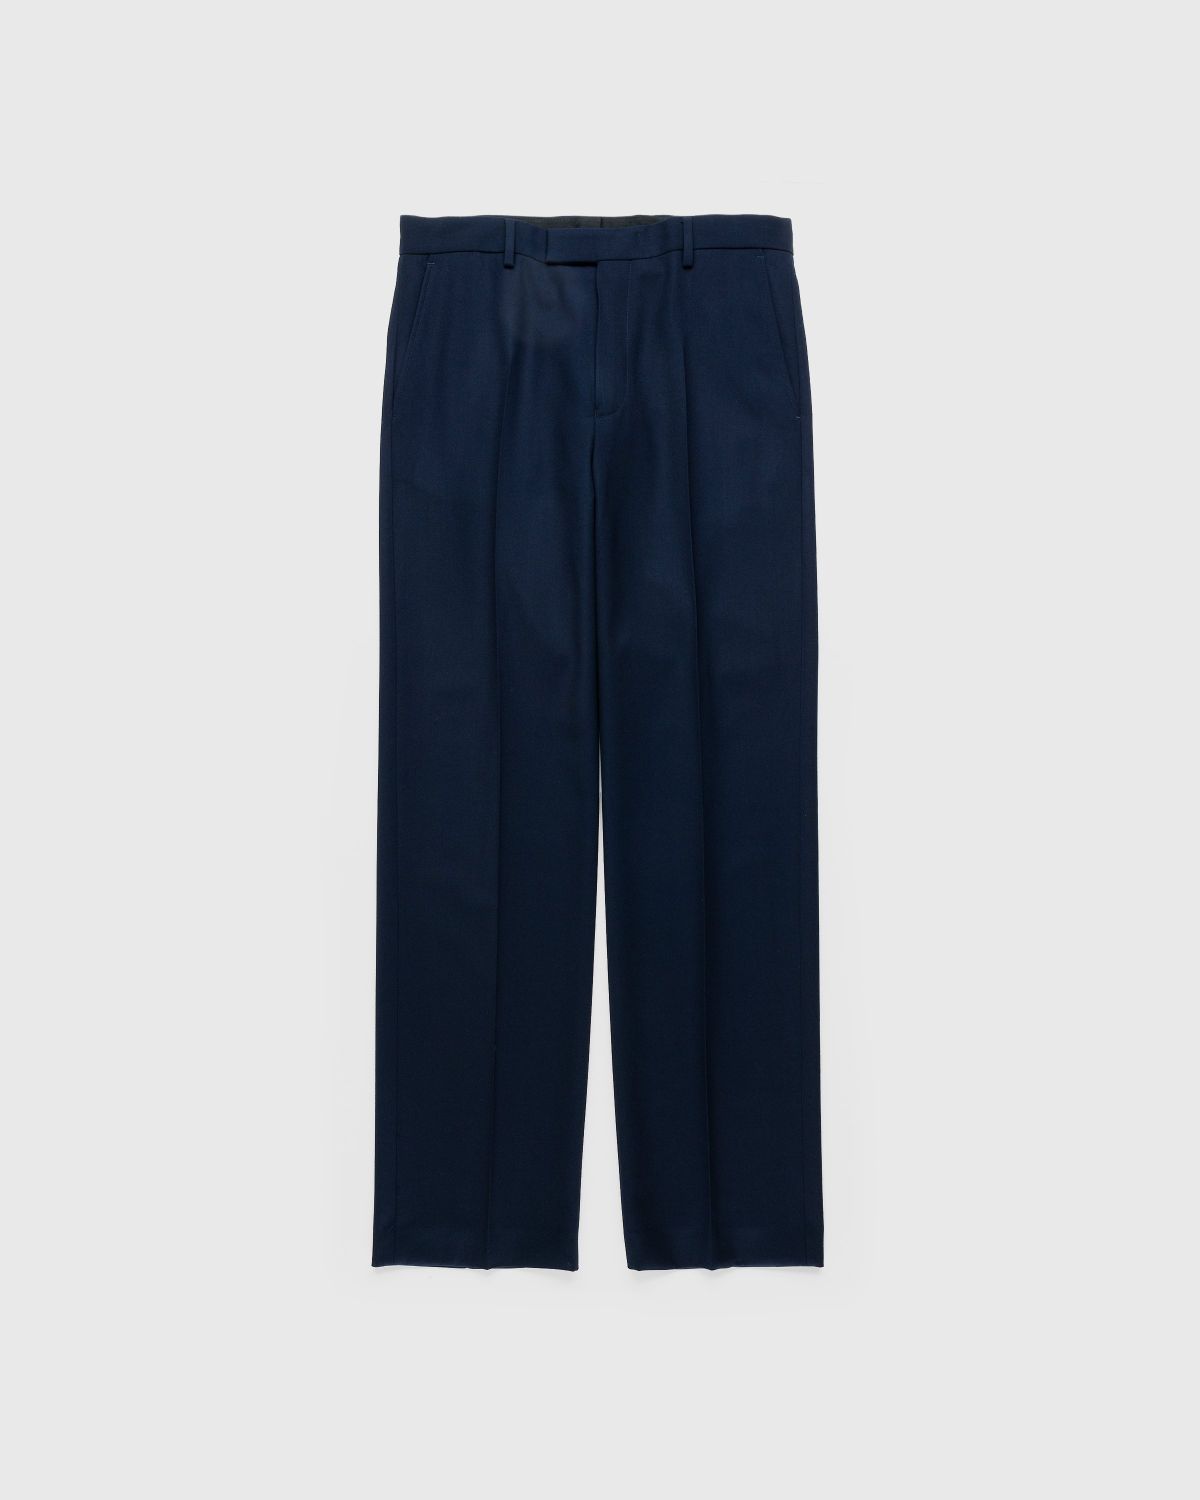 Dries van Noten – Pinnet Long Pants Blue - Trousers - Blue - Image 1